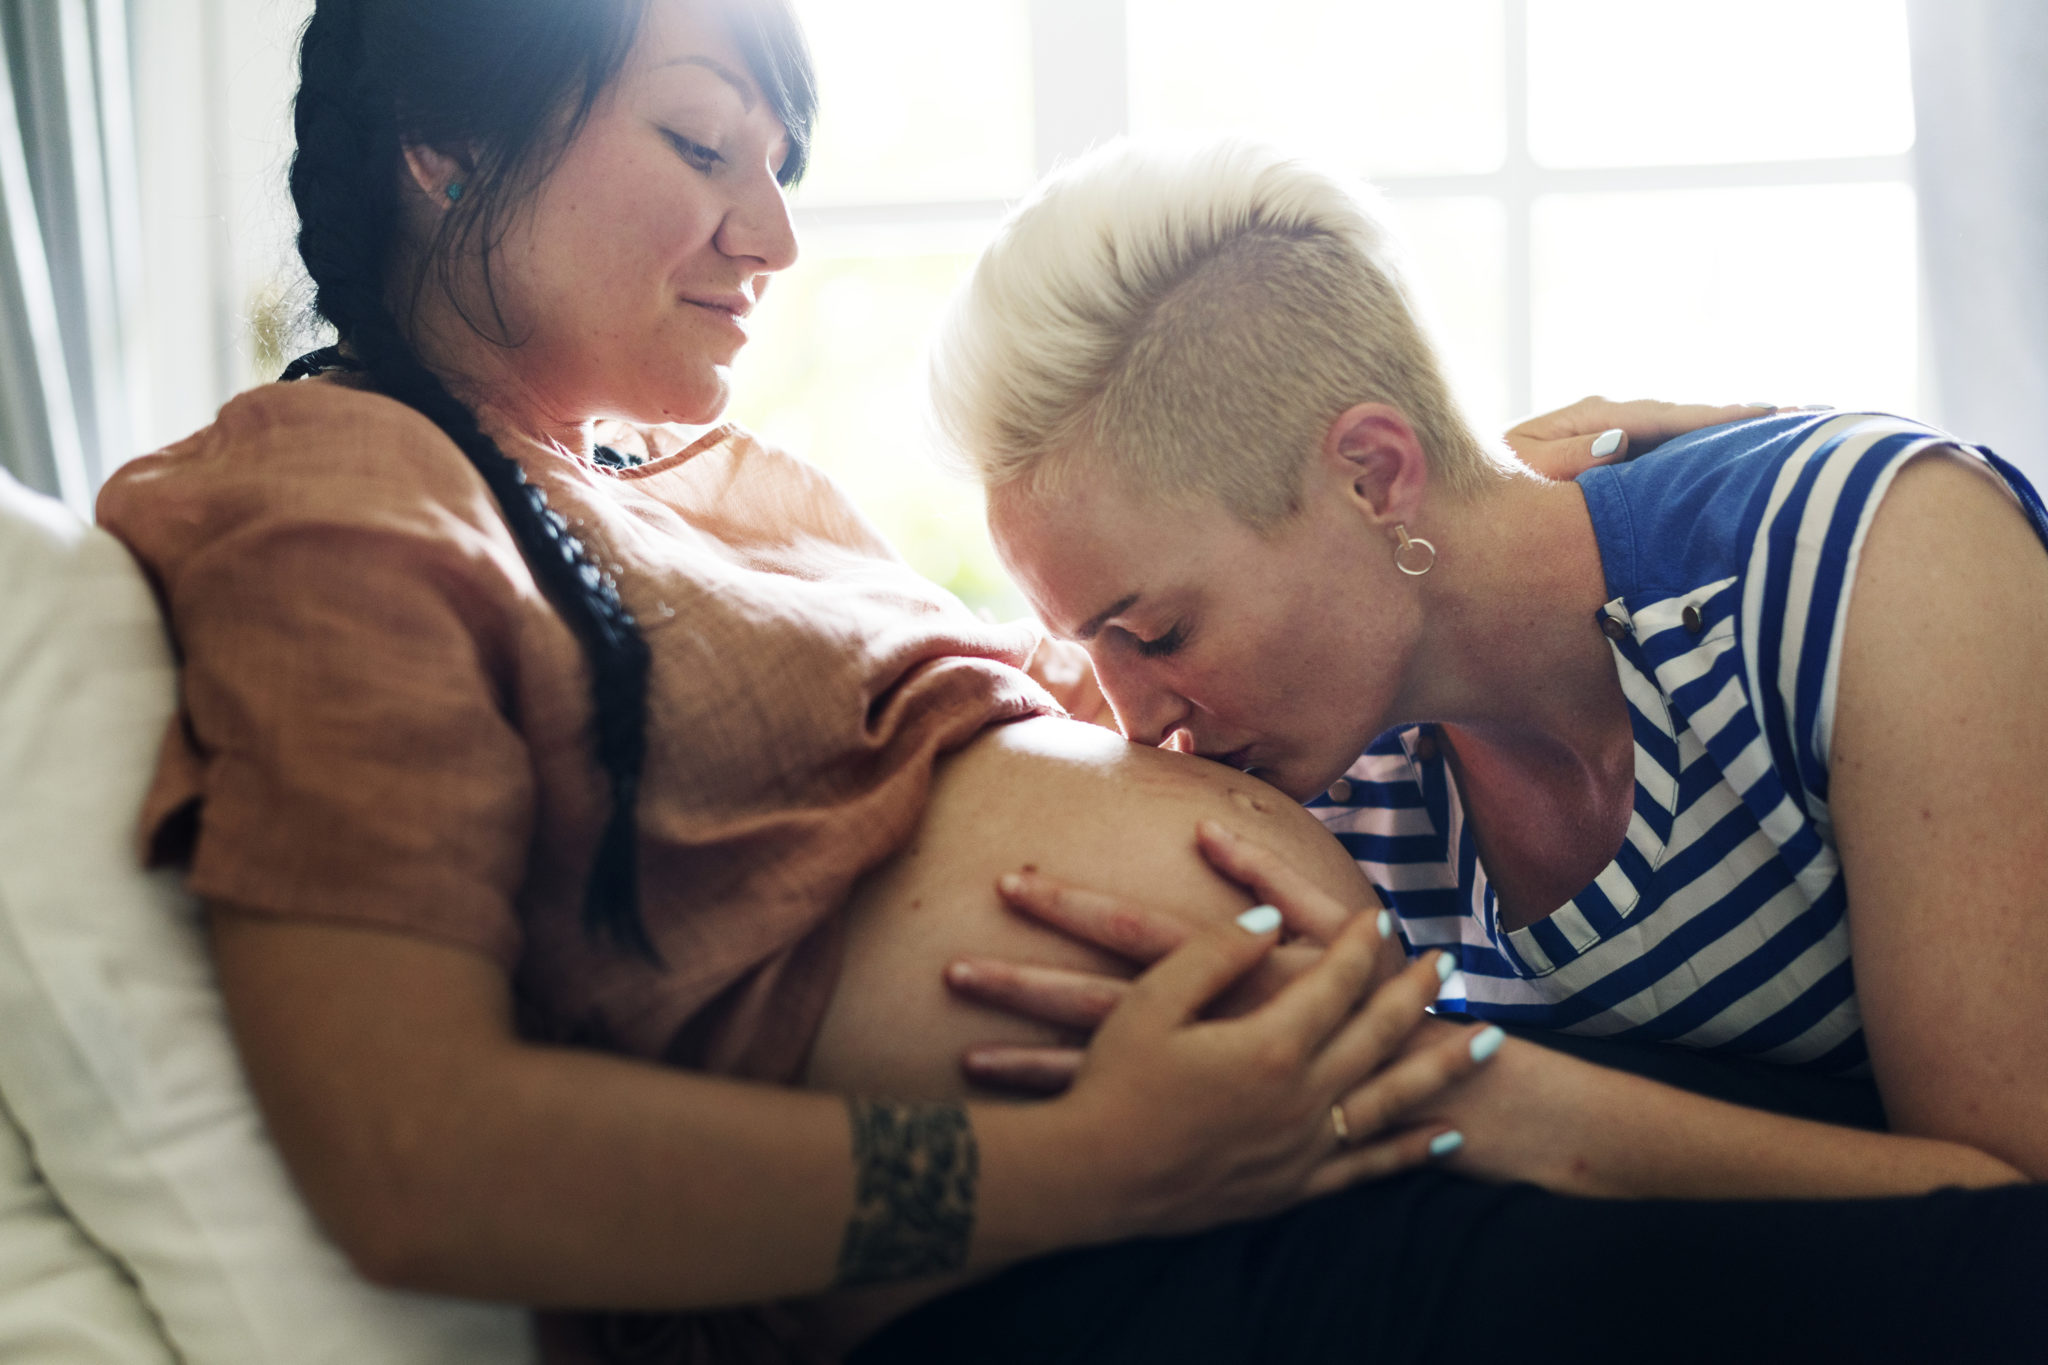 21 Weeks Pregnant Sex During Pregnancy image image